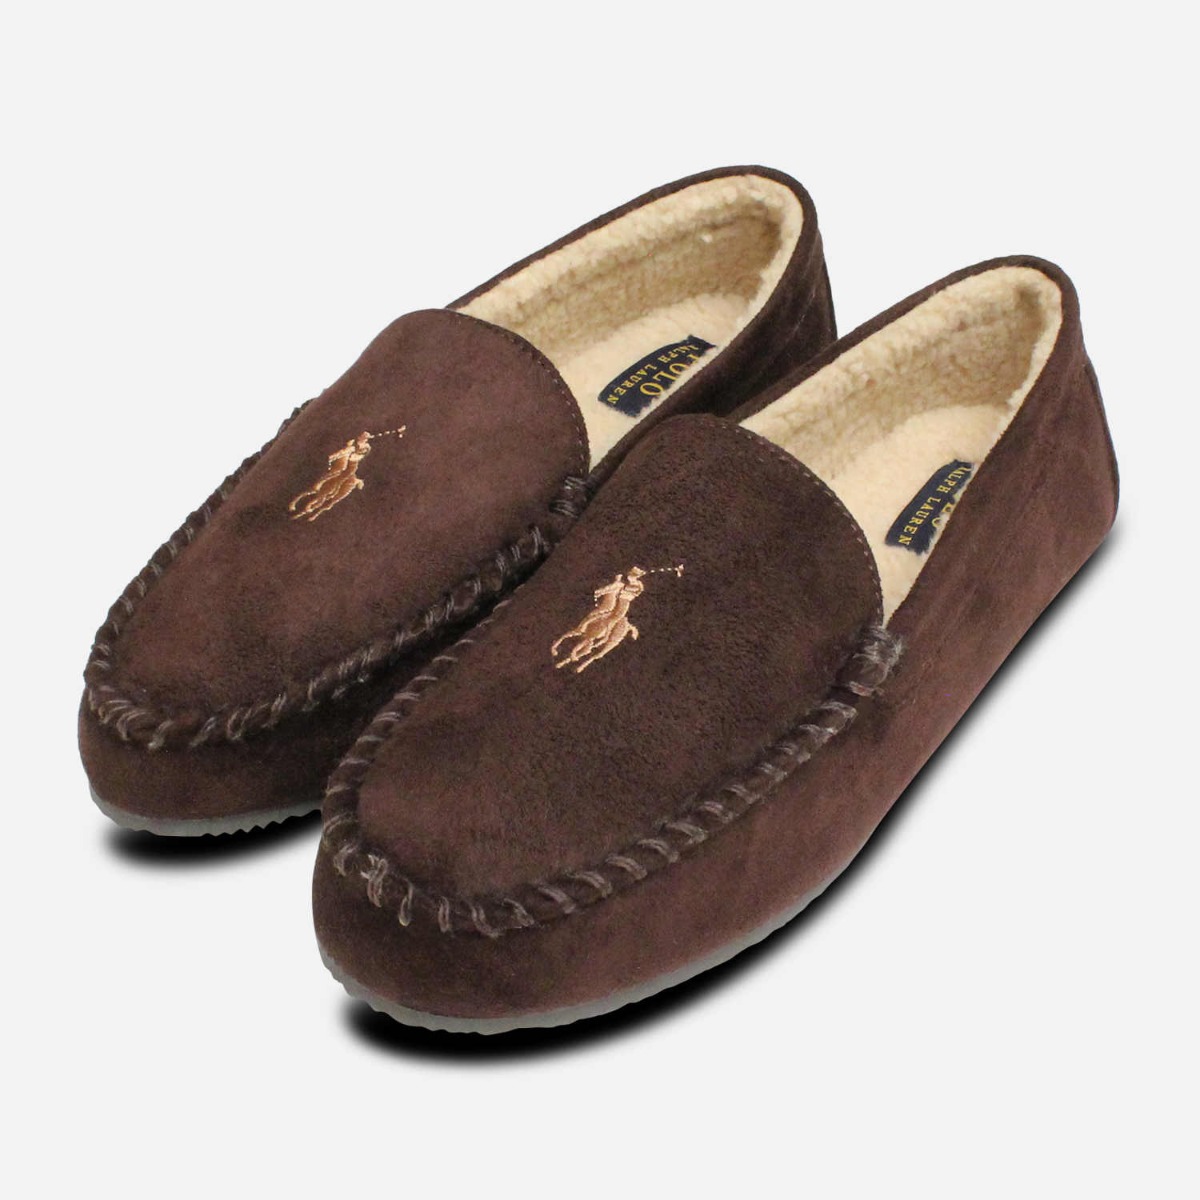 Ralph Lauren Polo Mens Slippers in Chocolate Brown | eBay